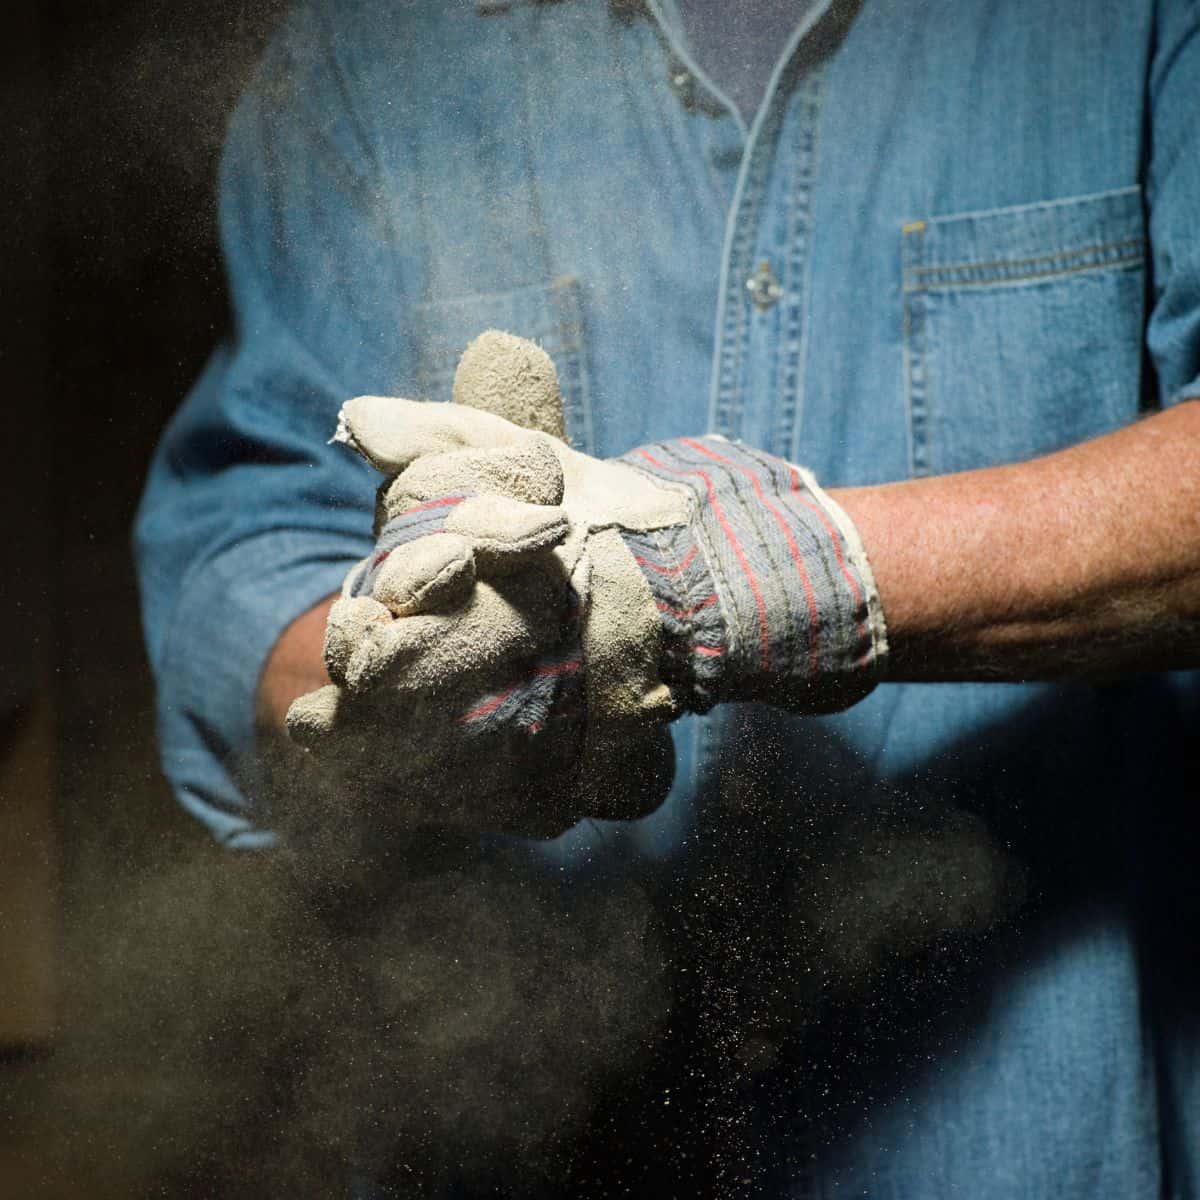 workers gloved hands releasing dust